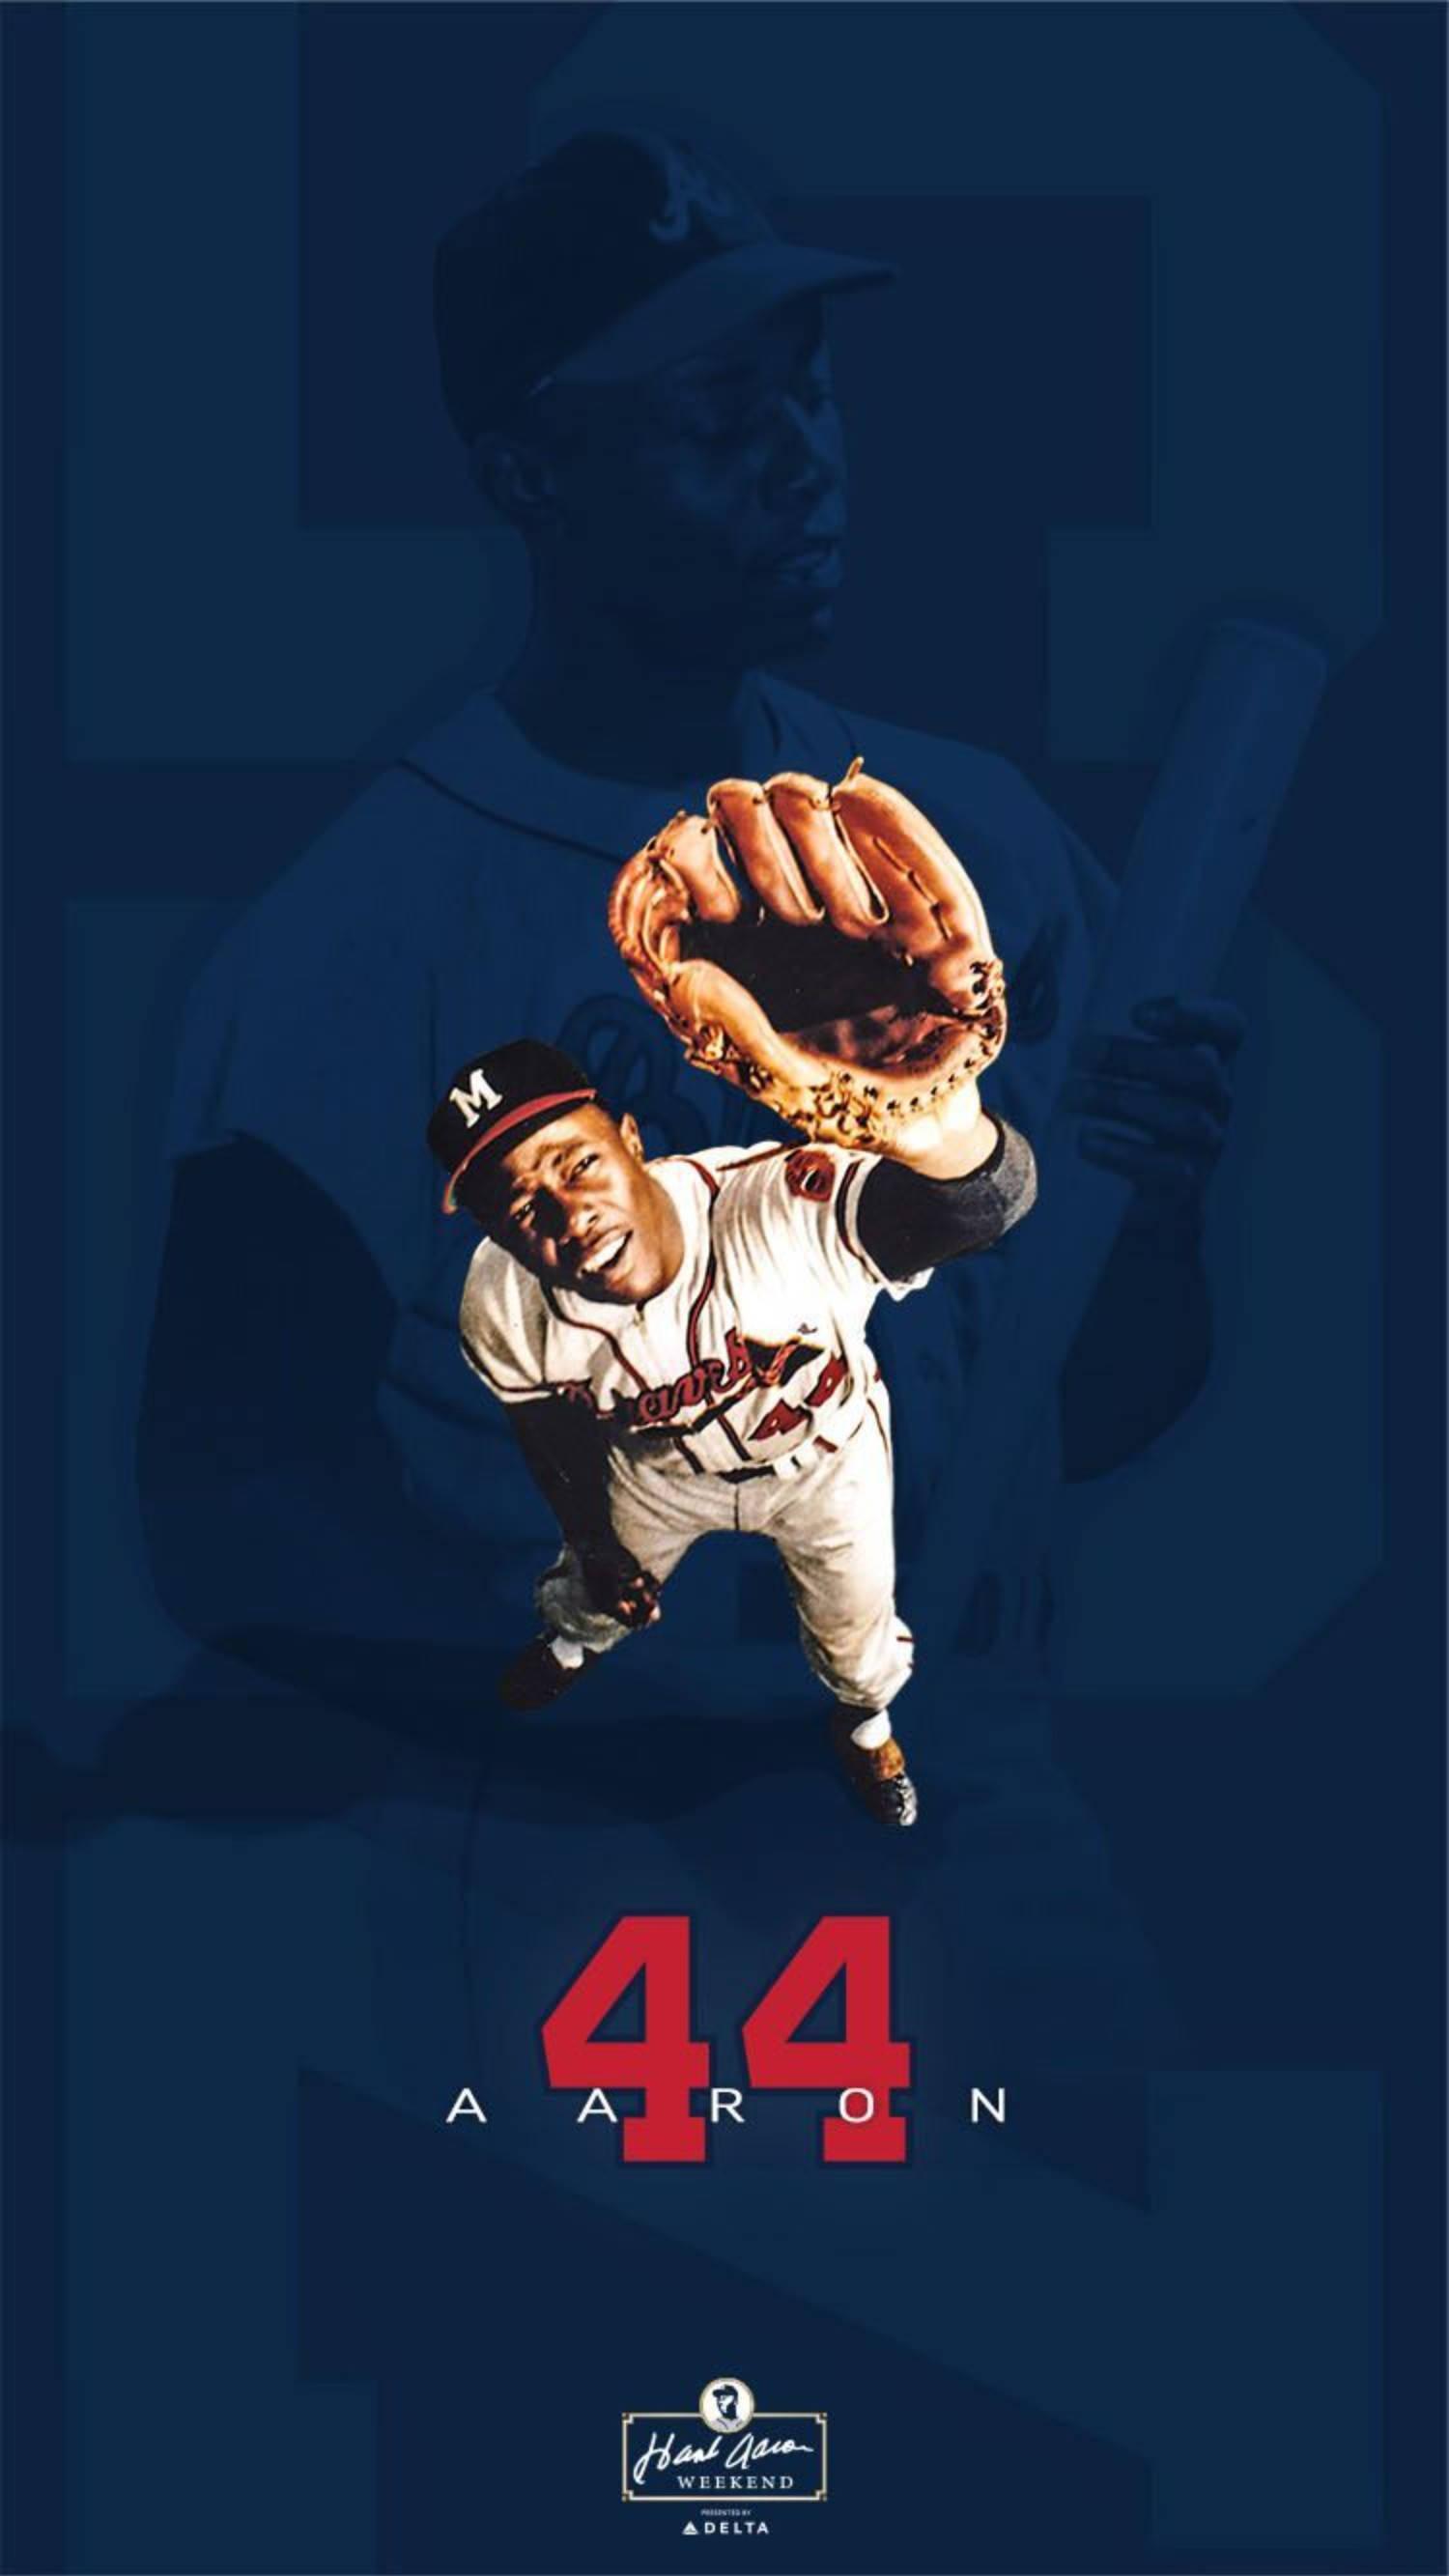 Download Hank Aaron 44 Baseball Player Wallpaper